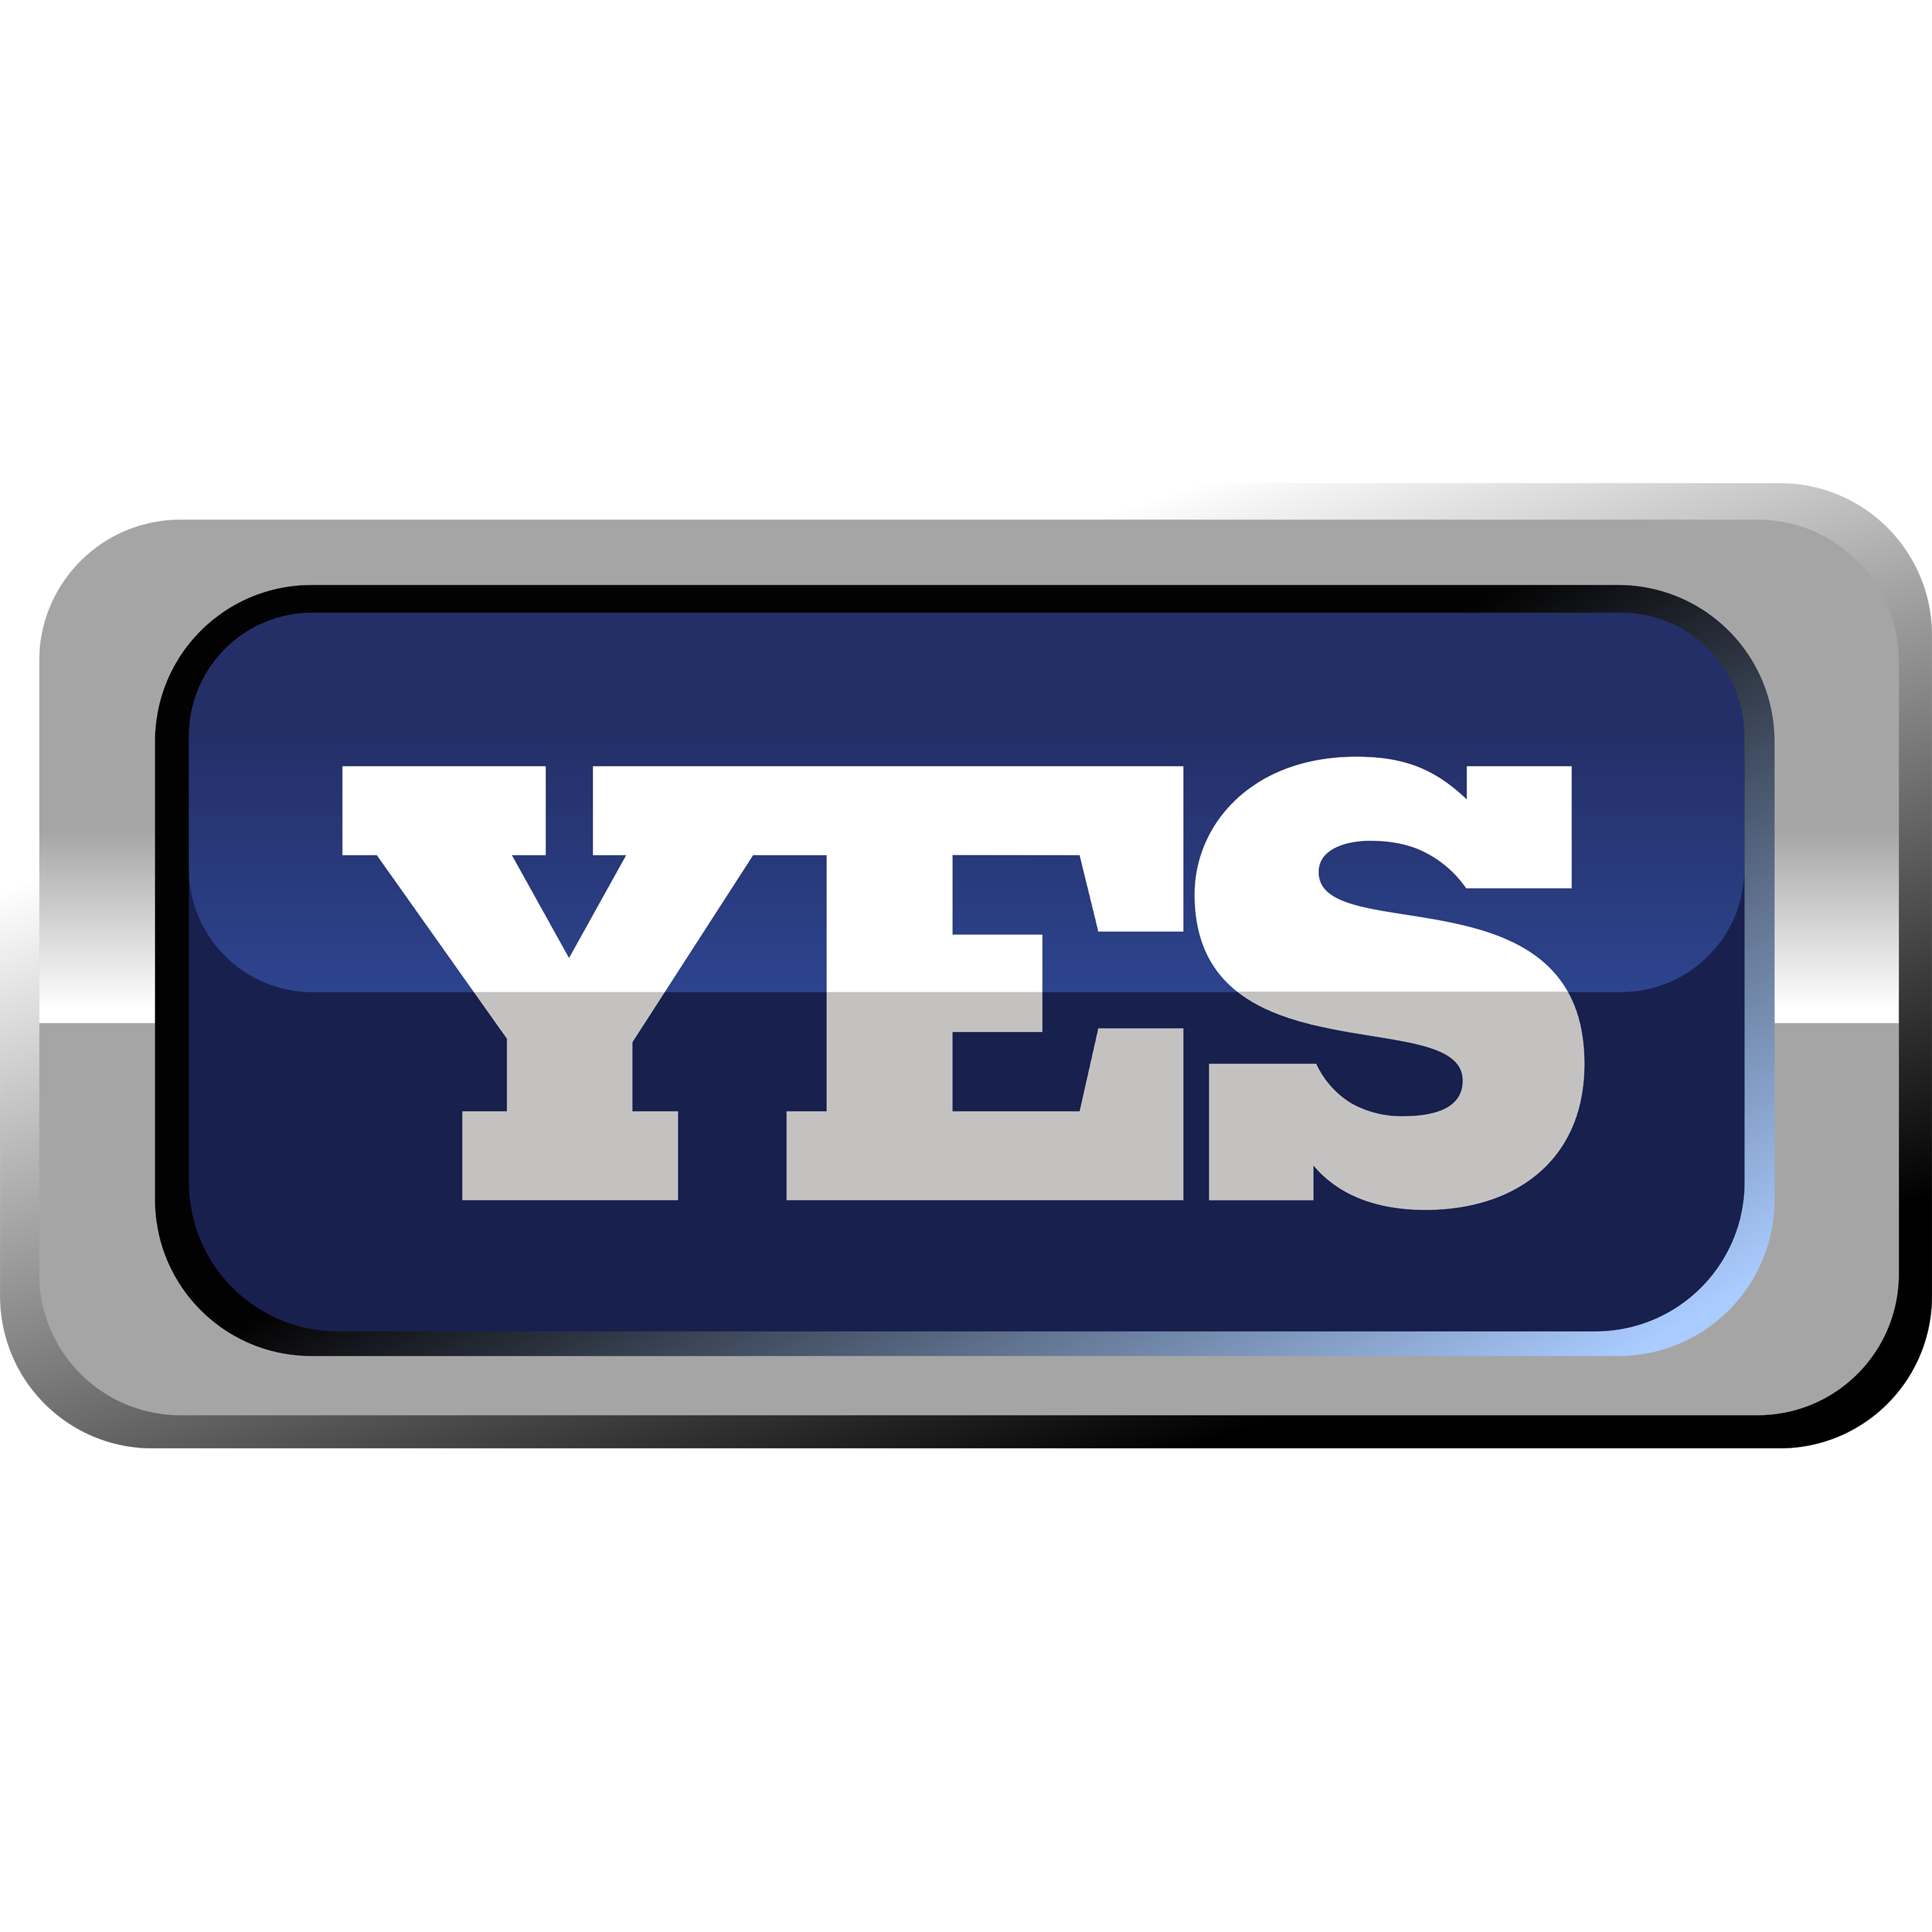 YES Network Logo Transparent Image